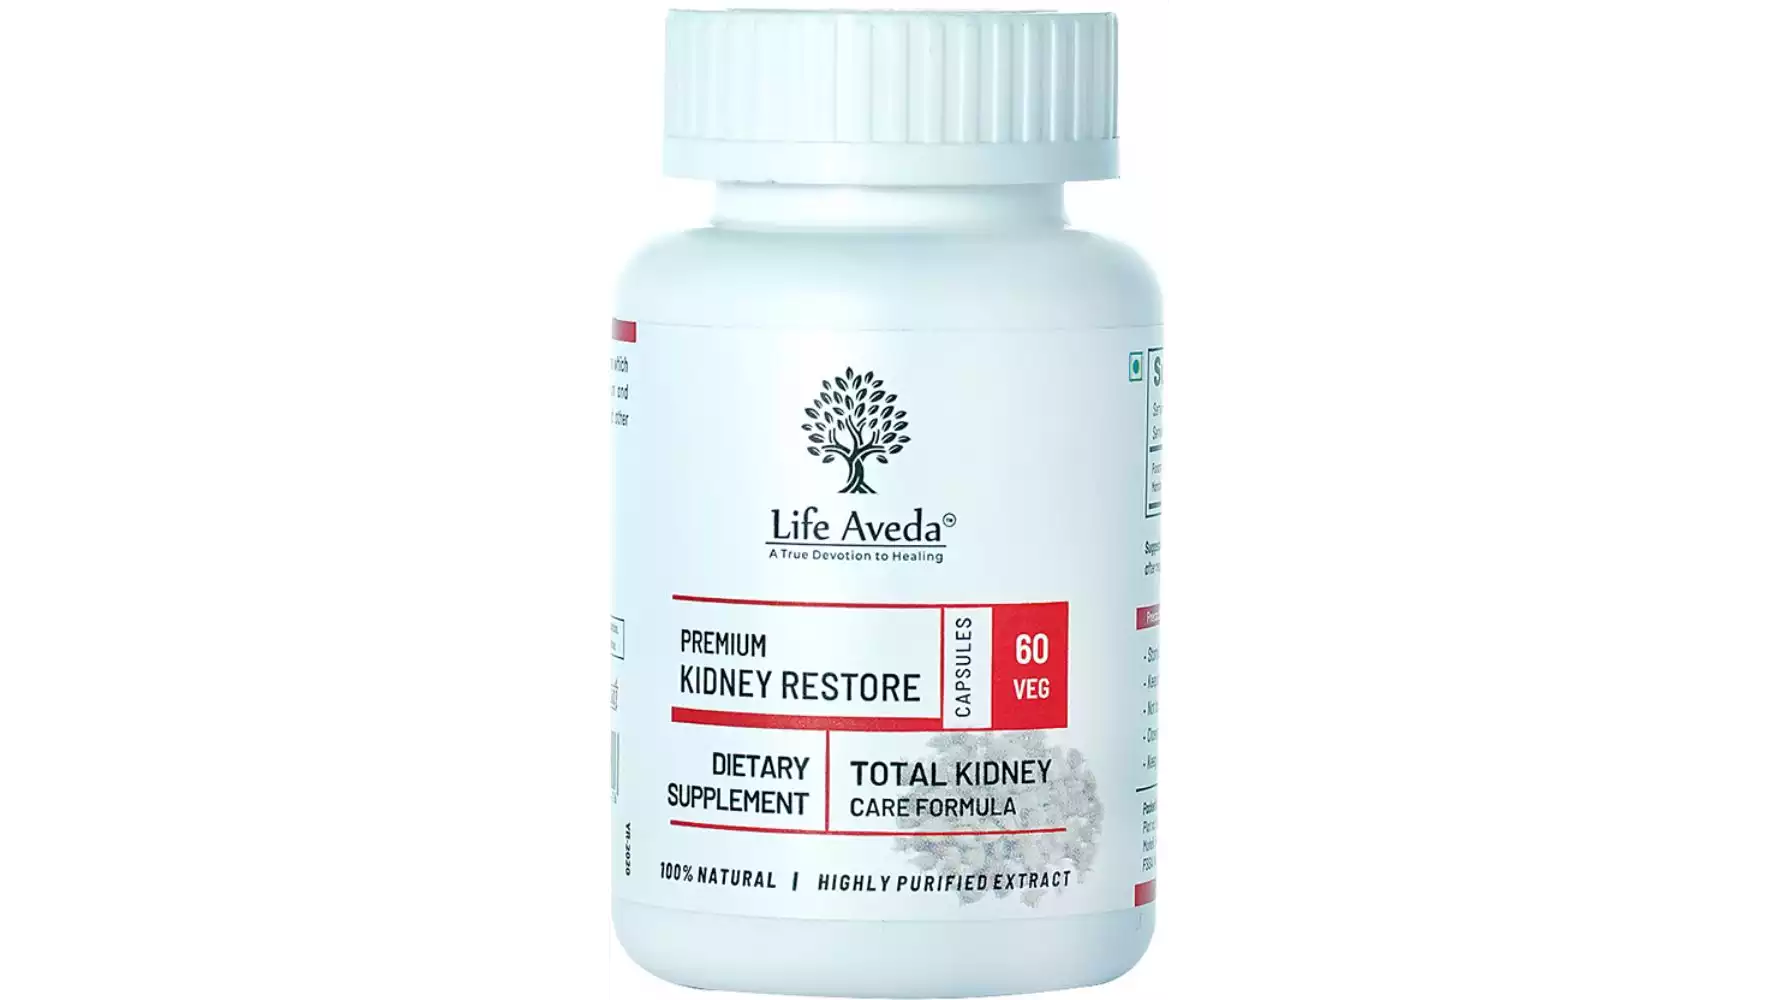 Life Aveda Premium Kidney Restore (500Mg) Veg Capsules (60caps)